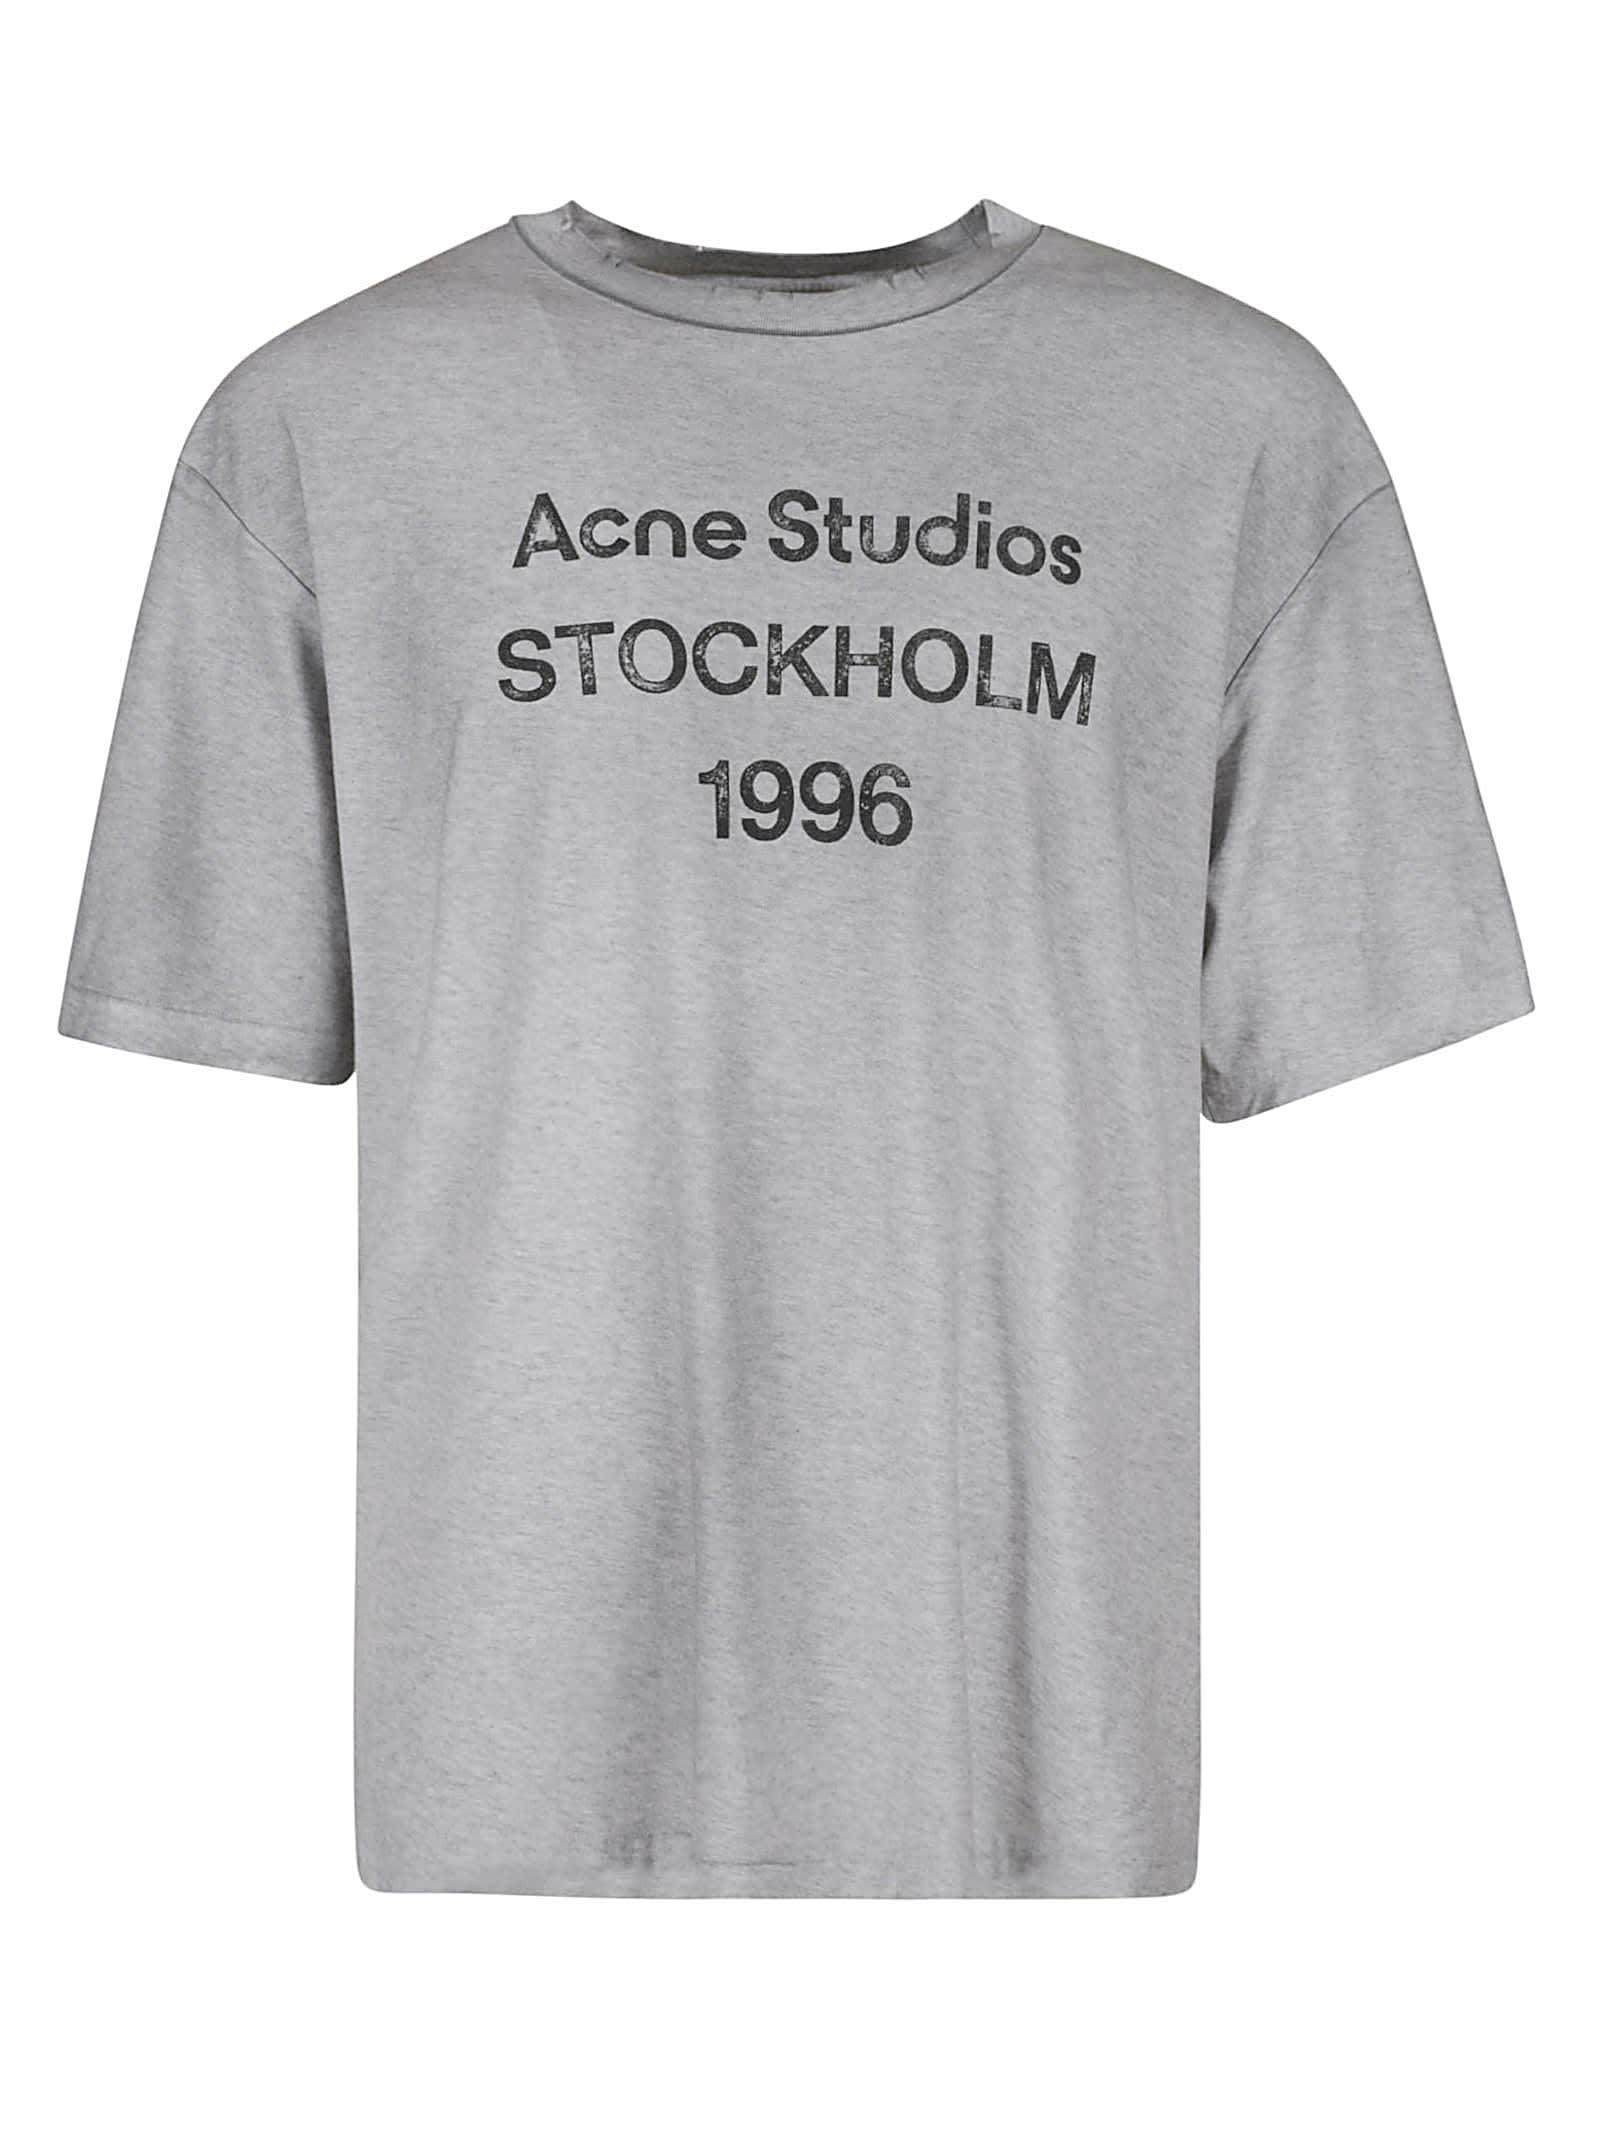 ACNE STUDIOS STOCKHOLM 1996 LOGO T-SHIRT